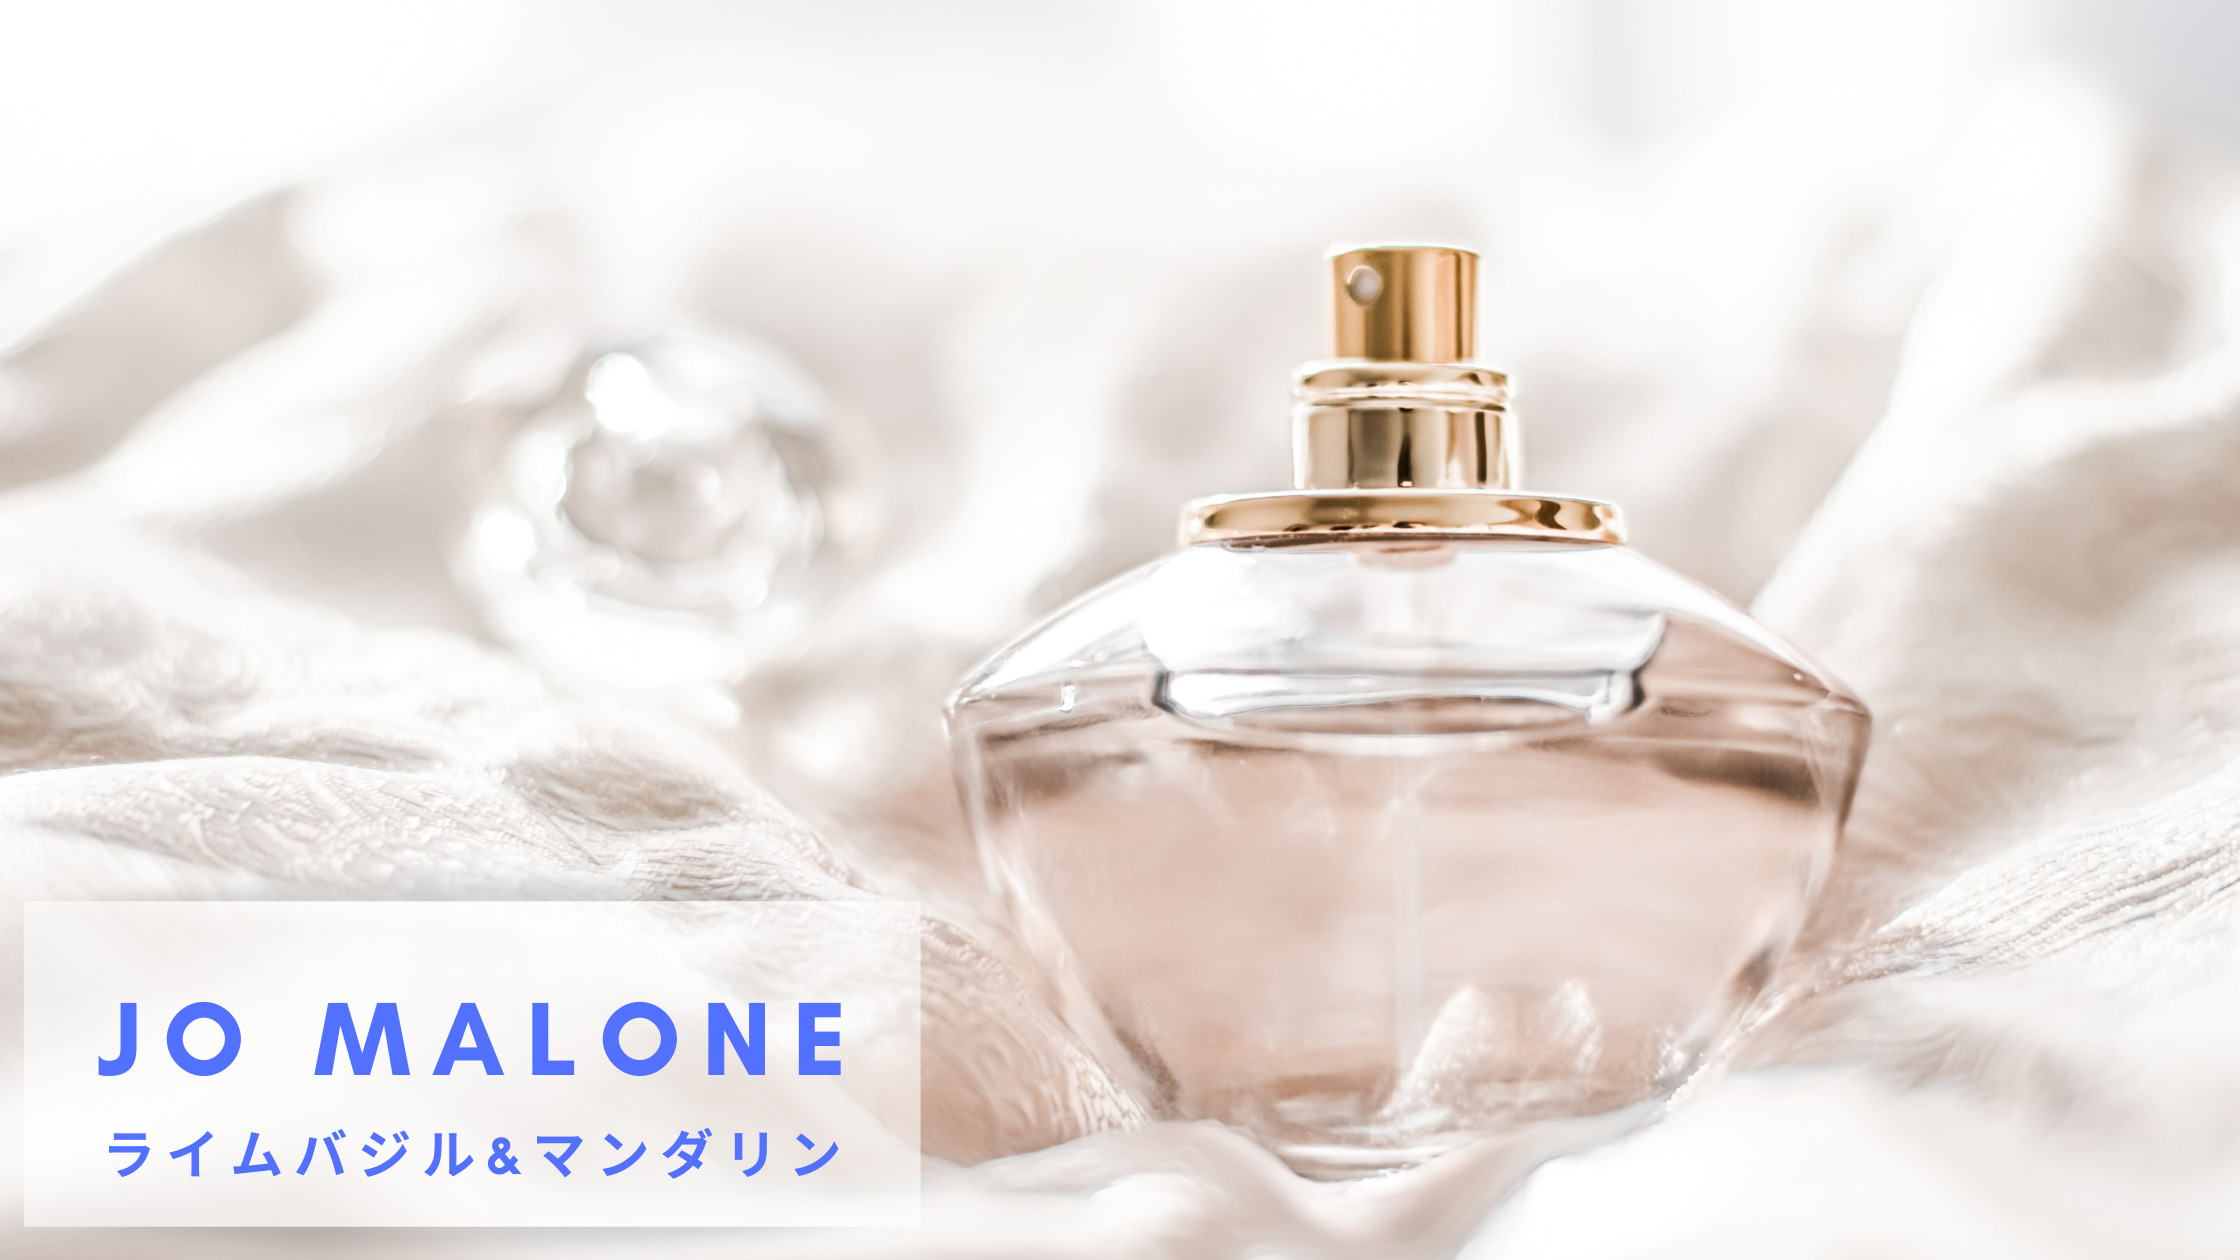 SALE限定セール ニキ 香水 Aquaflor Firenze Orphyca Perfume Tifou